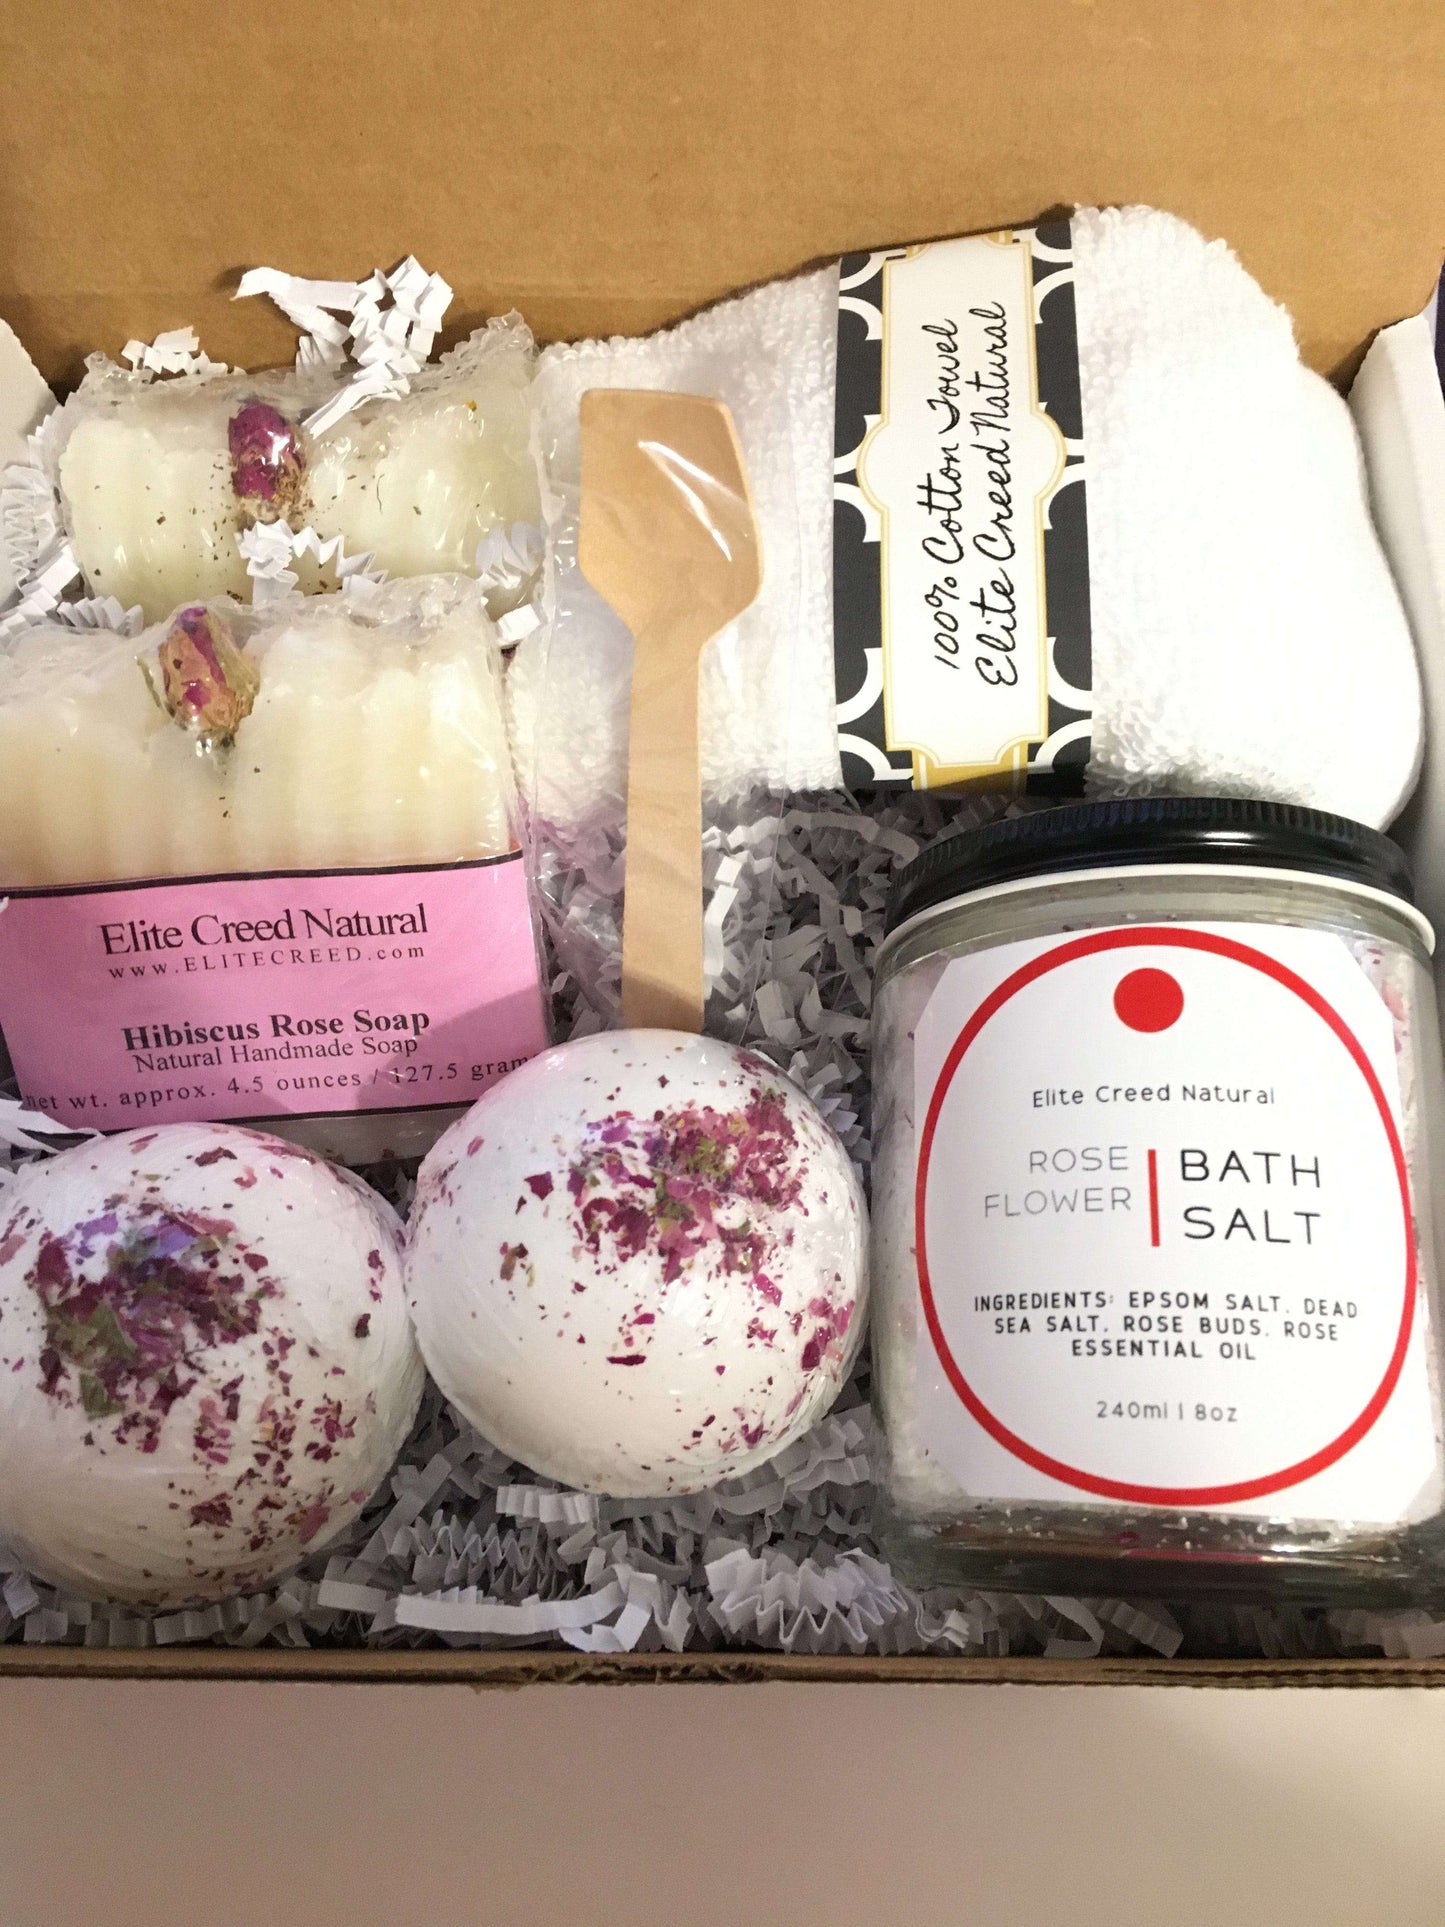 Handmade Soap Gift Sets Elite Creed Natural